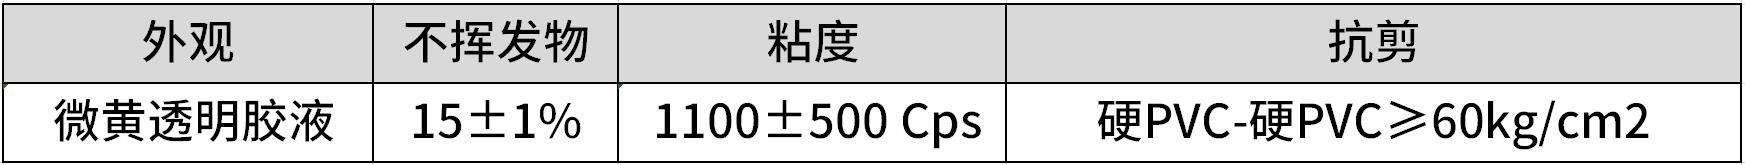 HR-705 硬PVC（硬质聚氯乙烯）胶水